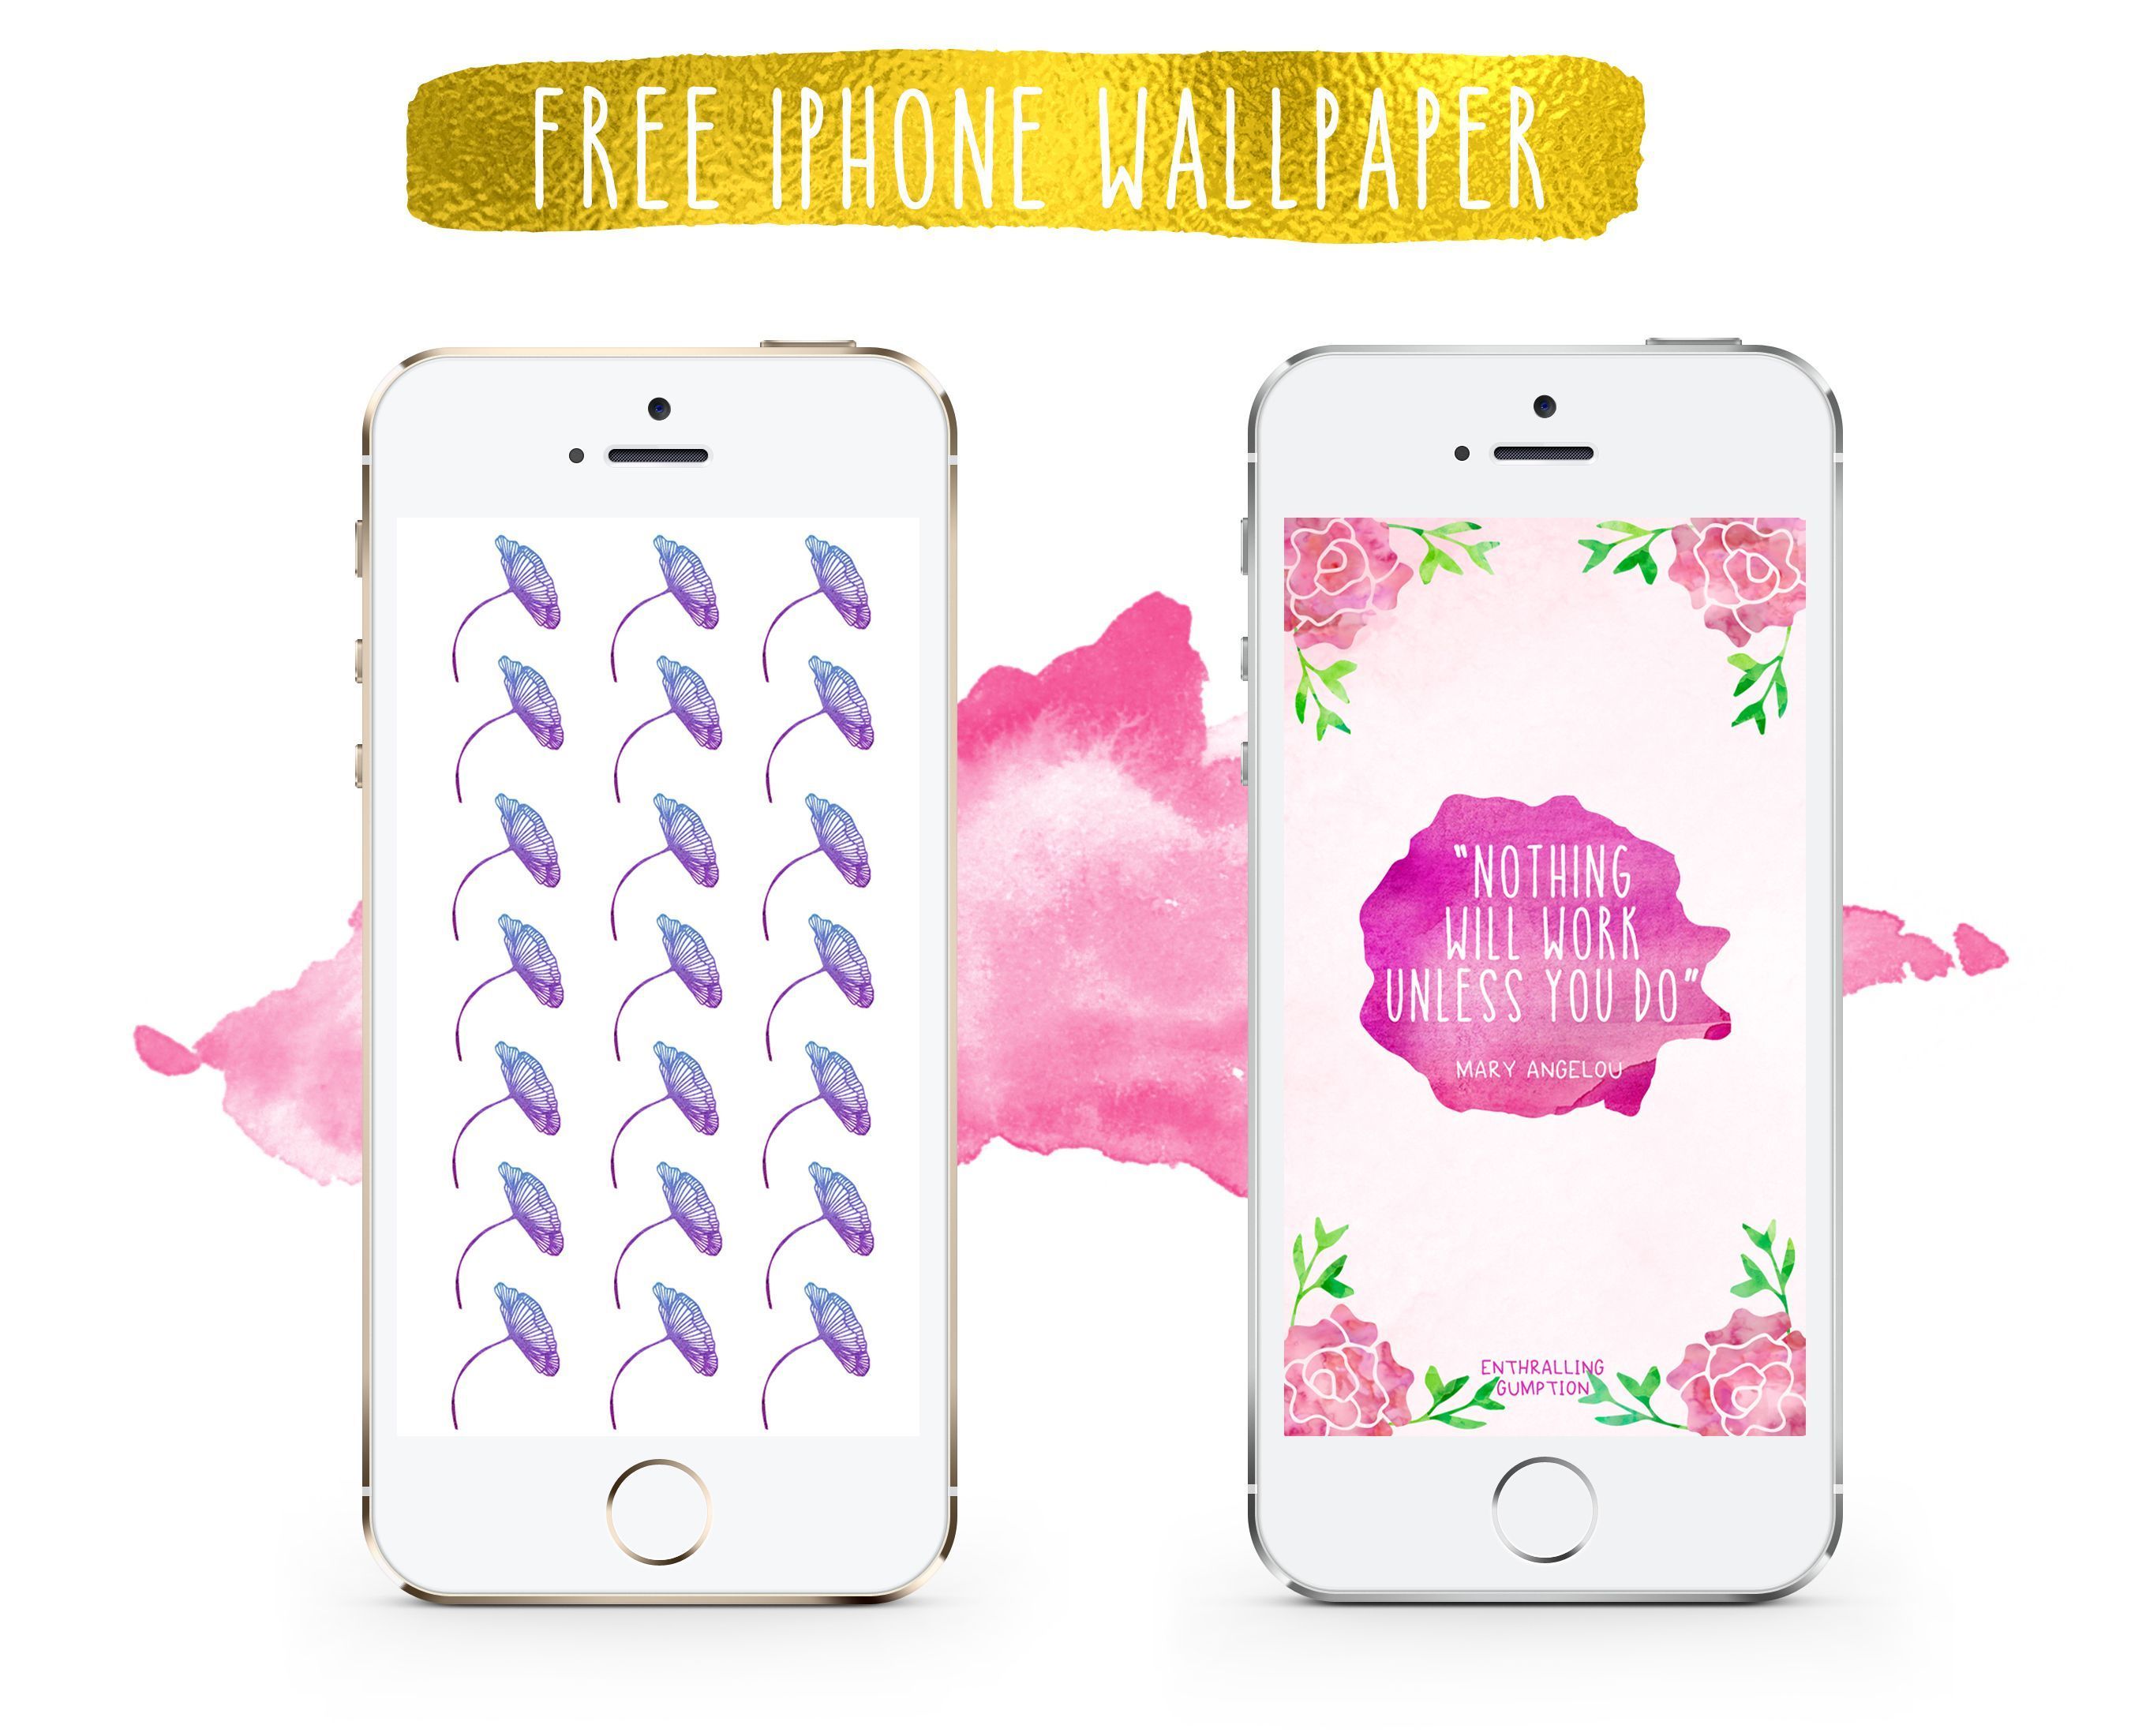 Free Iphone Wallpaper | Enthralling gumption